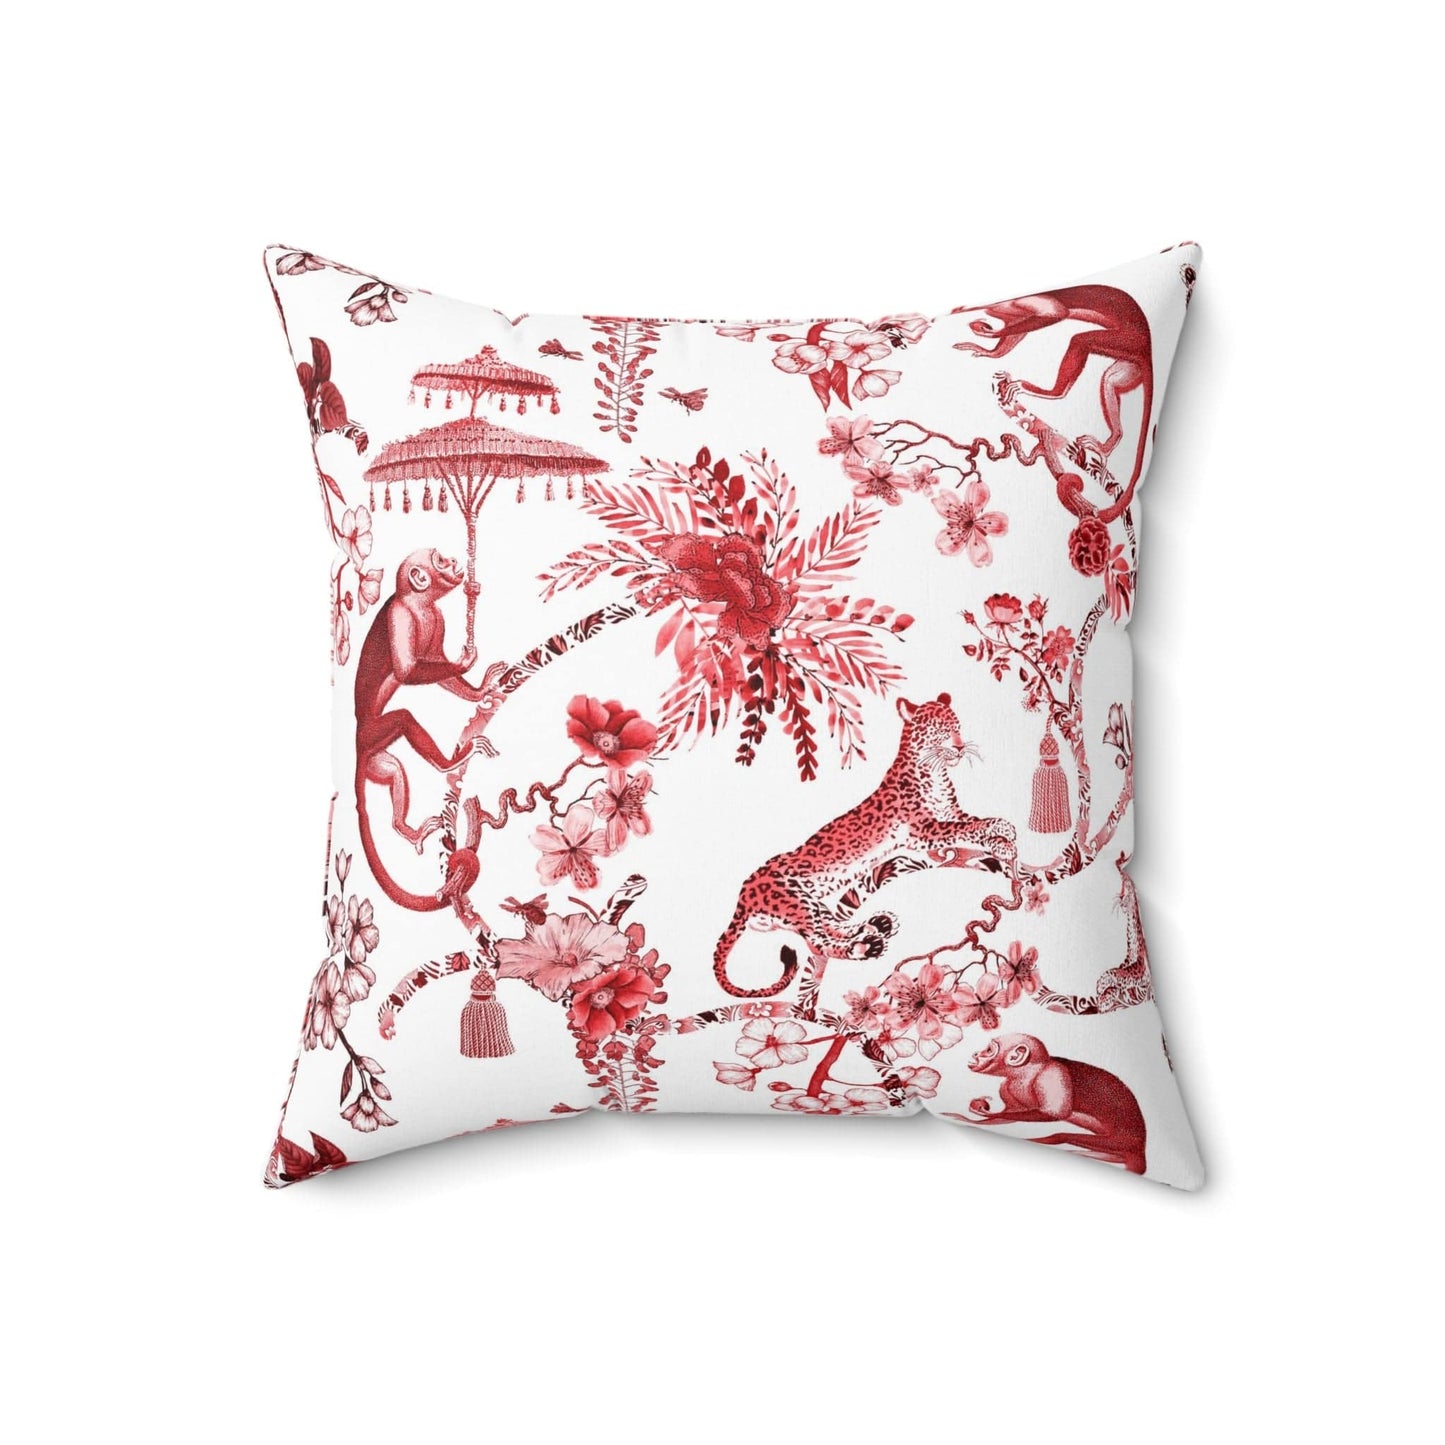 Kate McEnroe New York Chinoiserie Jungle Botanical Toile Throw Pillow, Red, White Chinoiserie Floral Cushions, Country Farmhouse Decor - 131382623 Throw Pillows